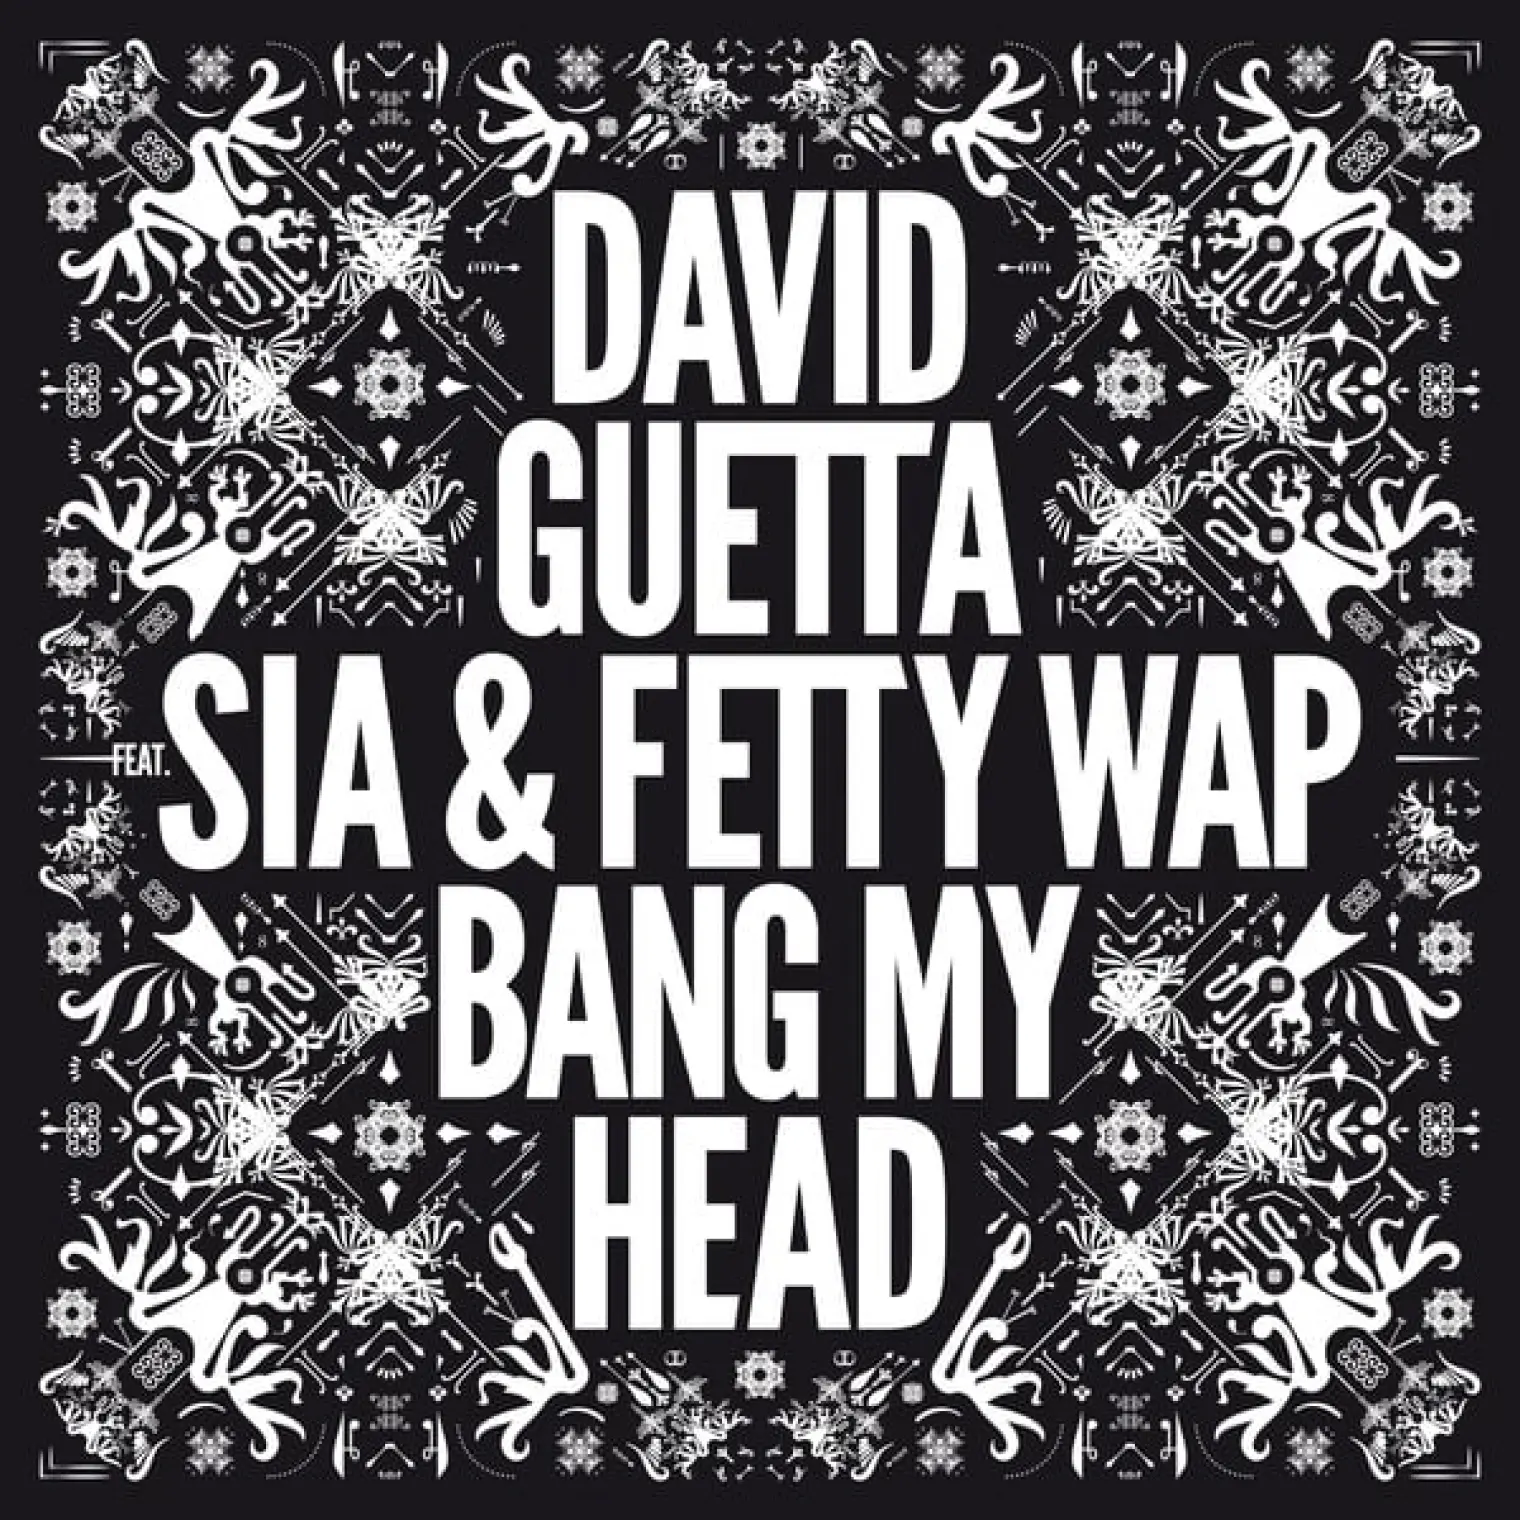 Bang My Head (feat. Sia & Fetty Wap) -  David Guetta 